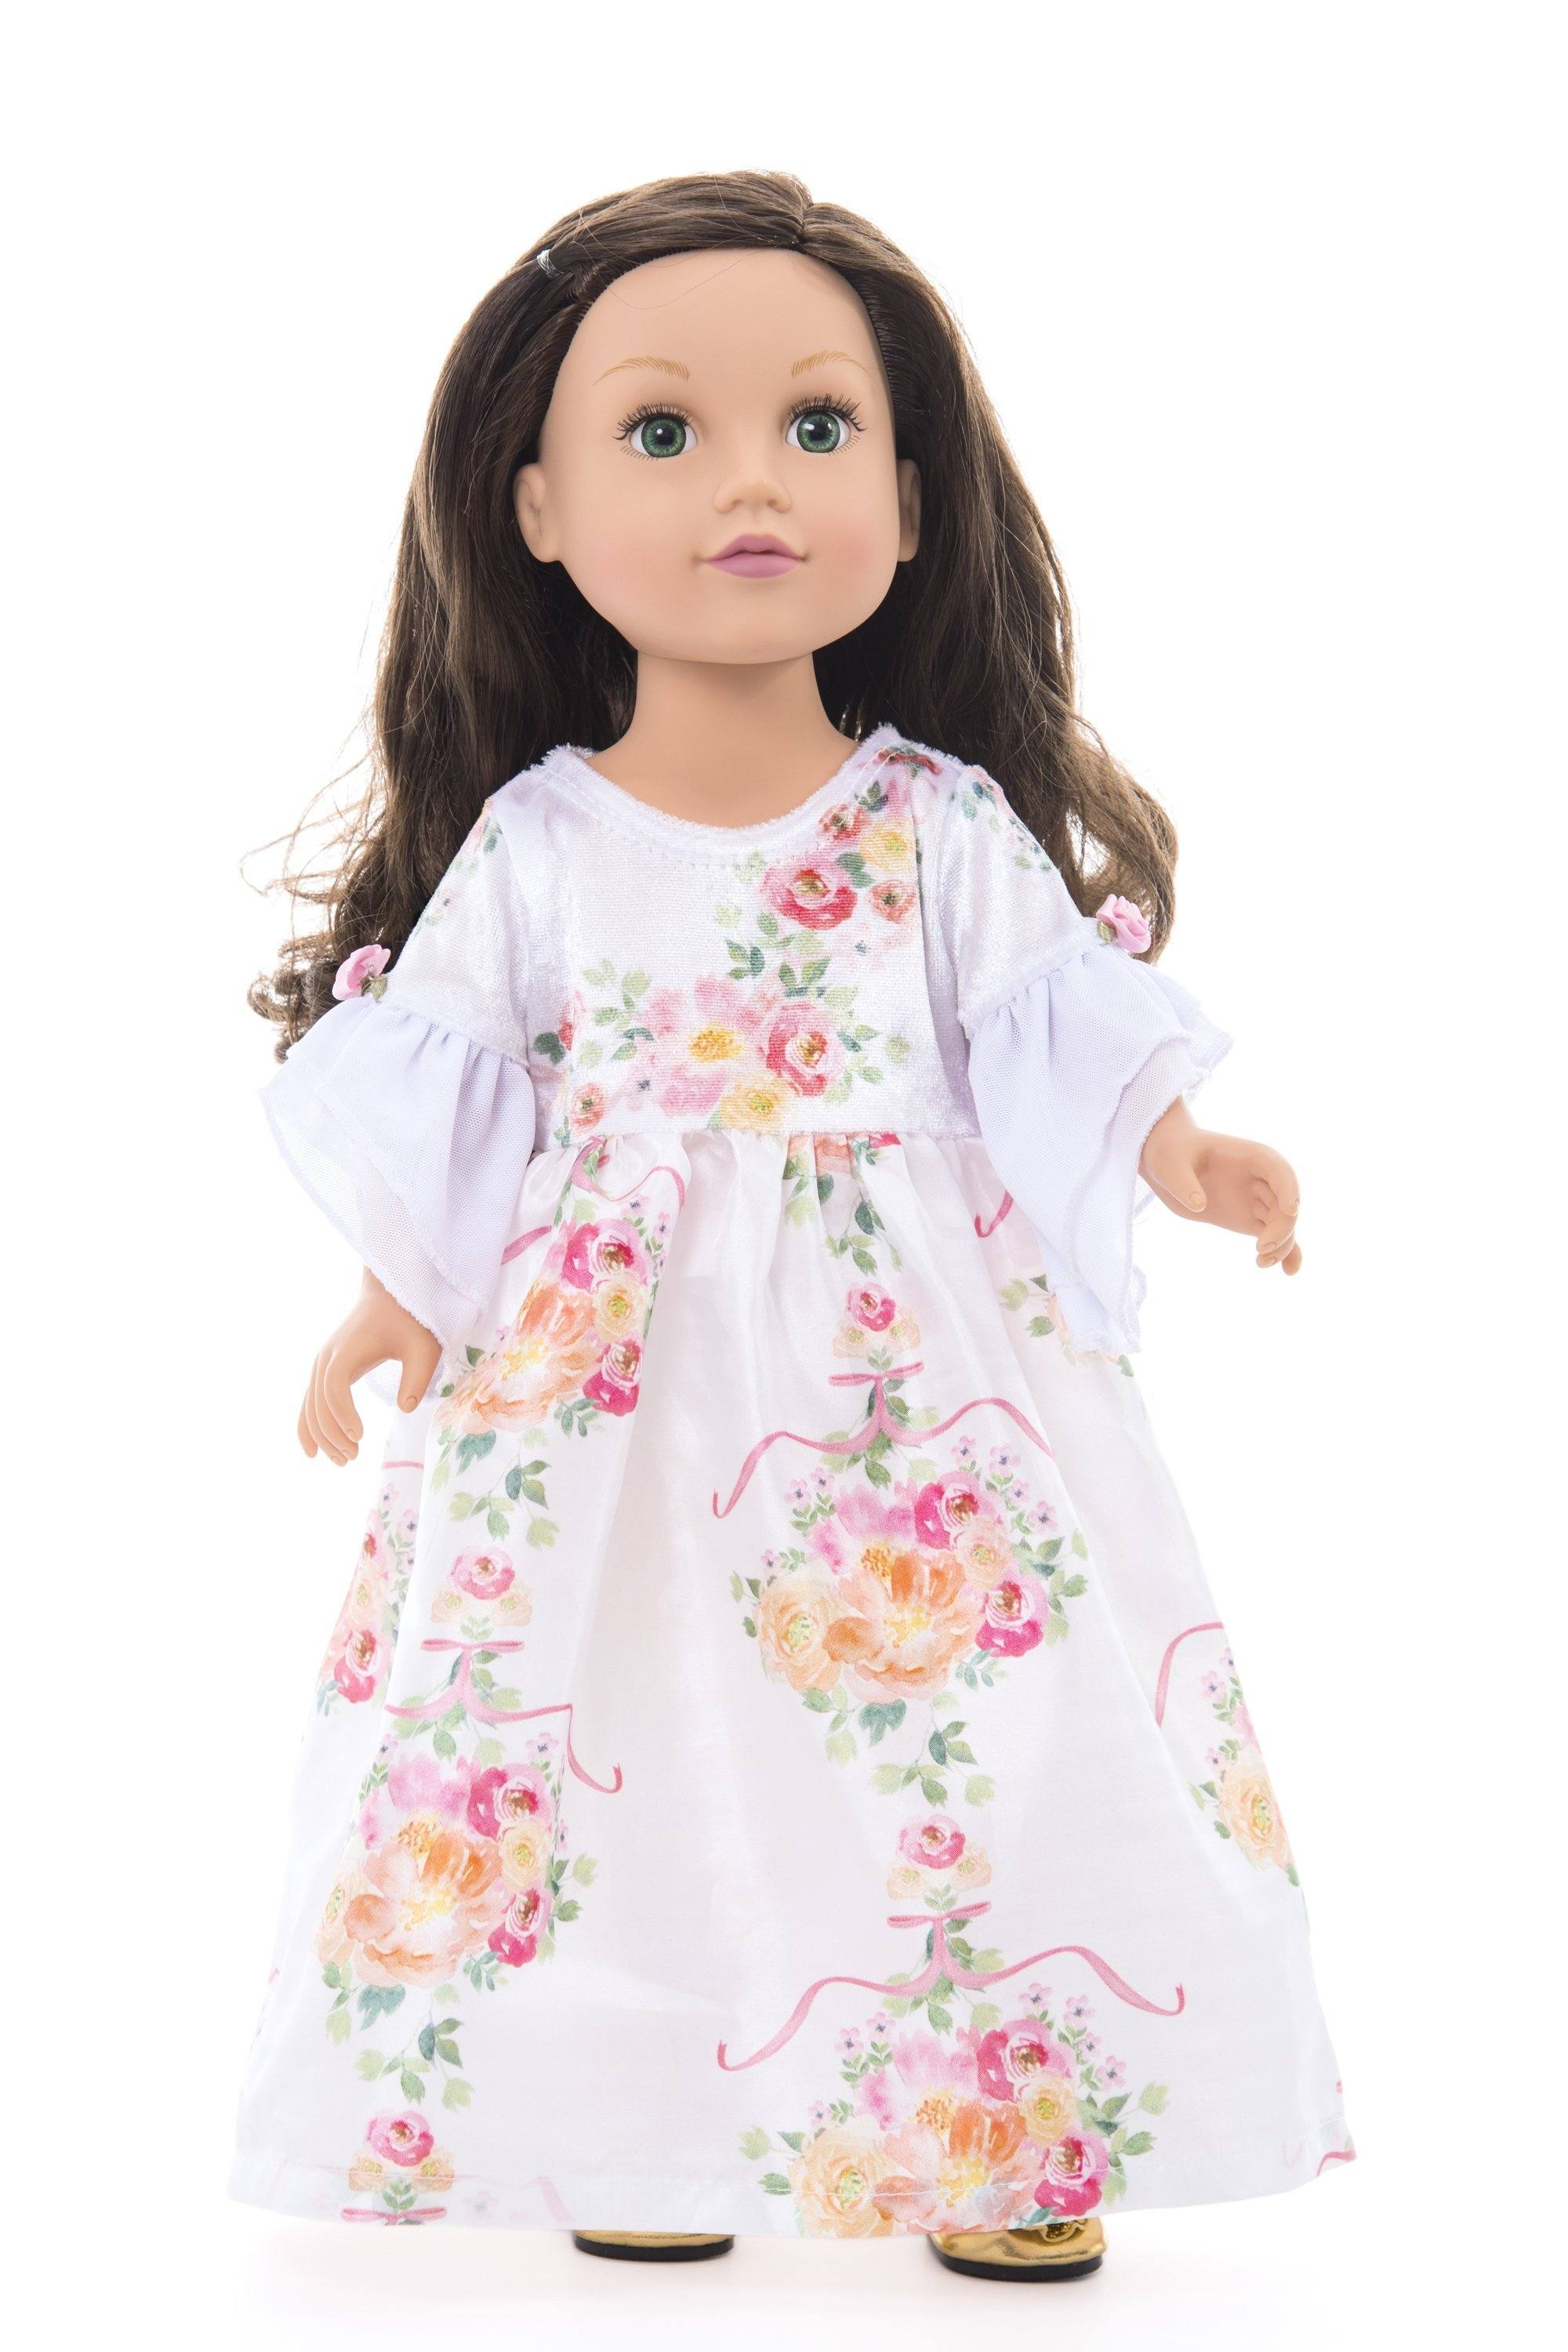 doll beautiful dress